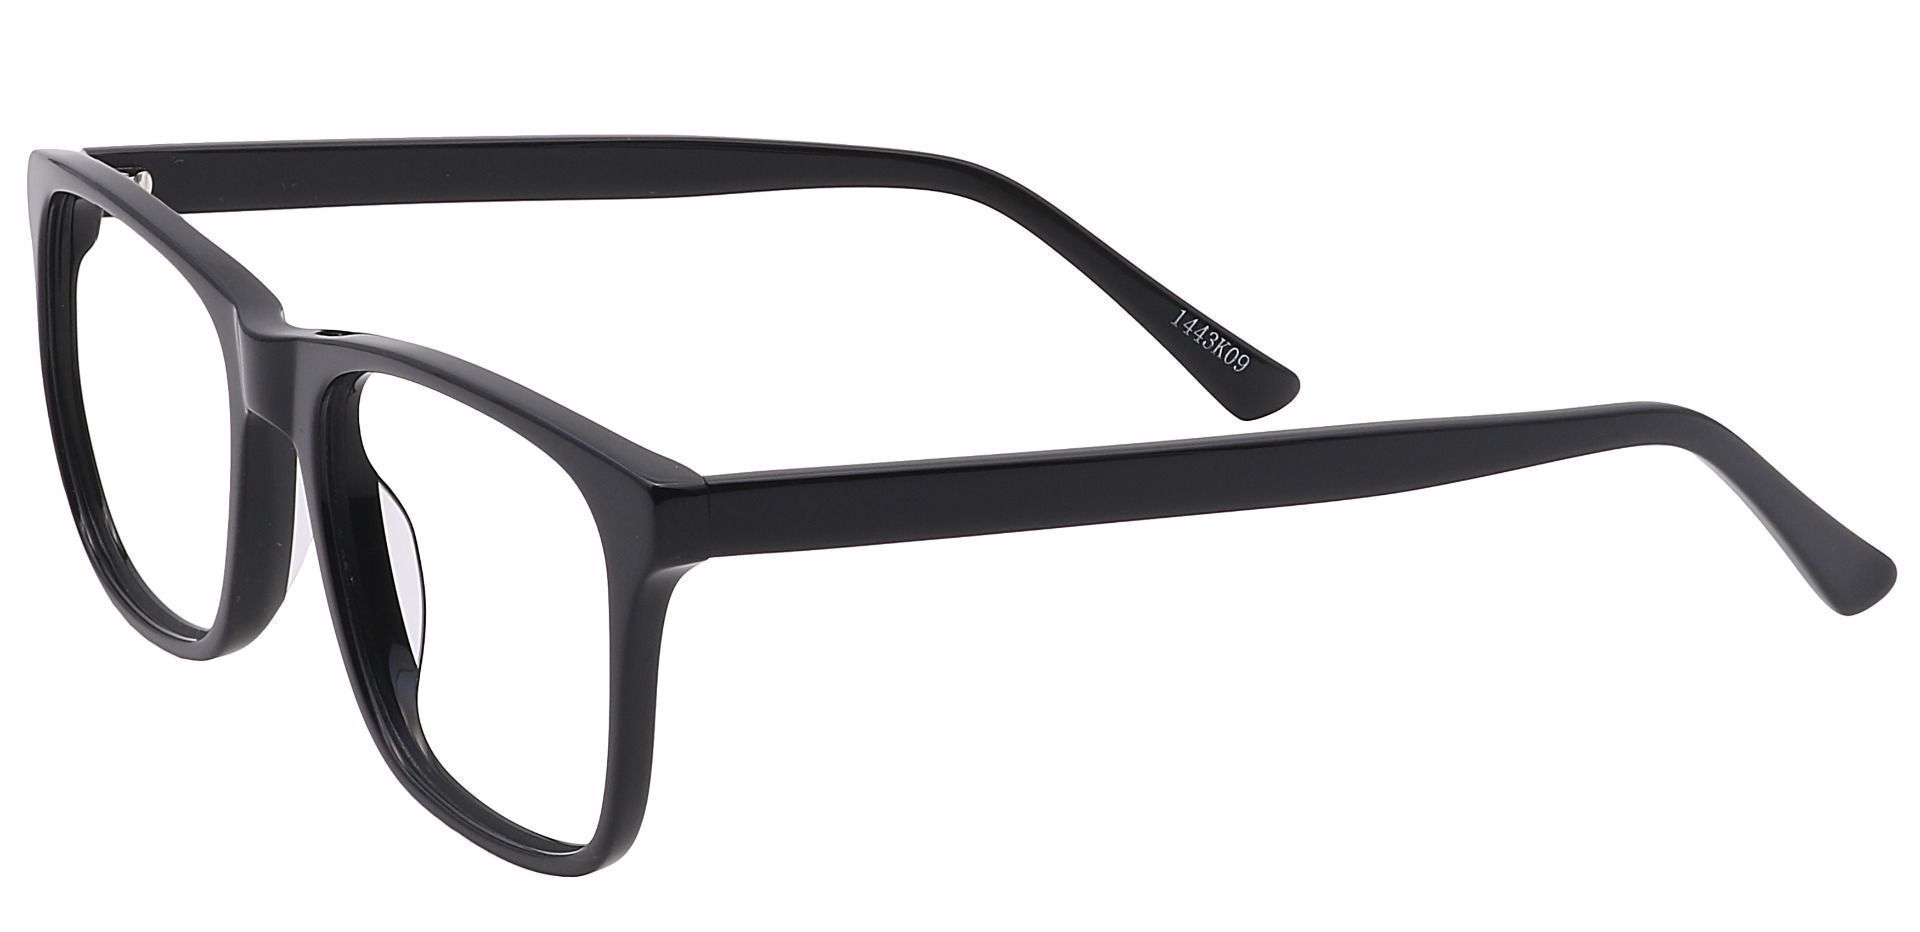 Cantina Square Eyeglasses Frame - Black